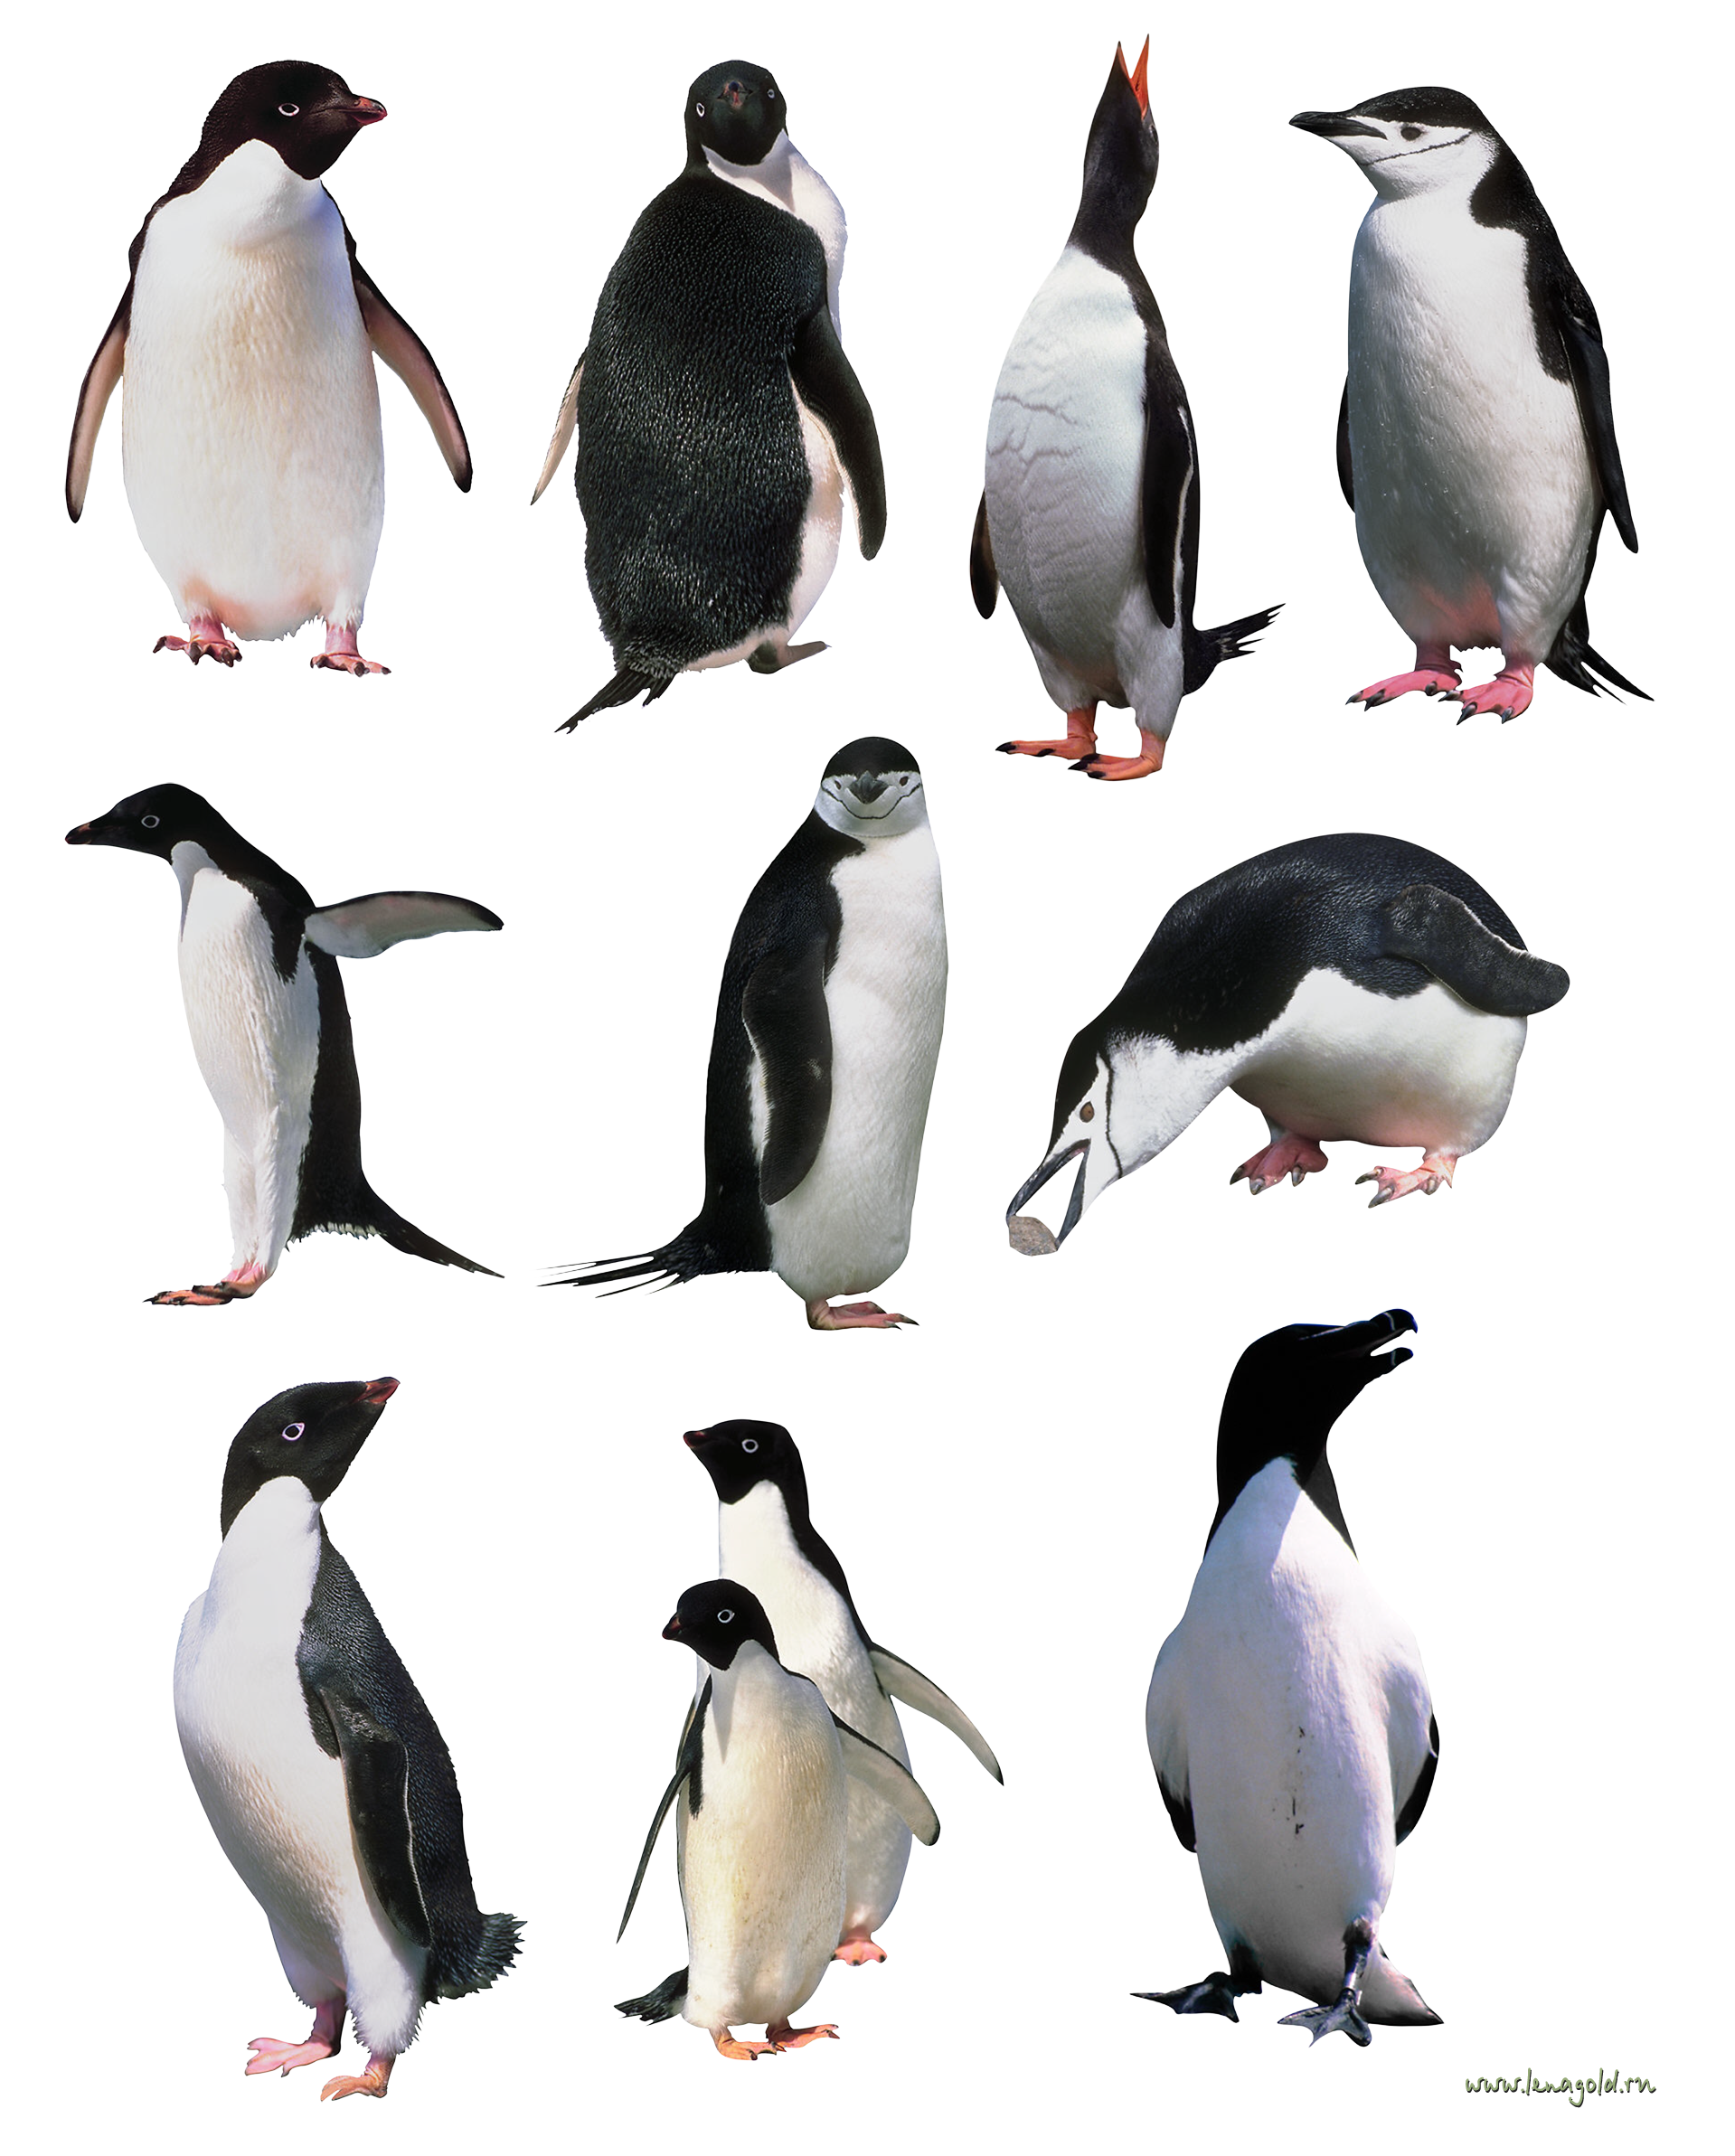 penguin clipart humboldt penguin